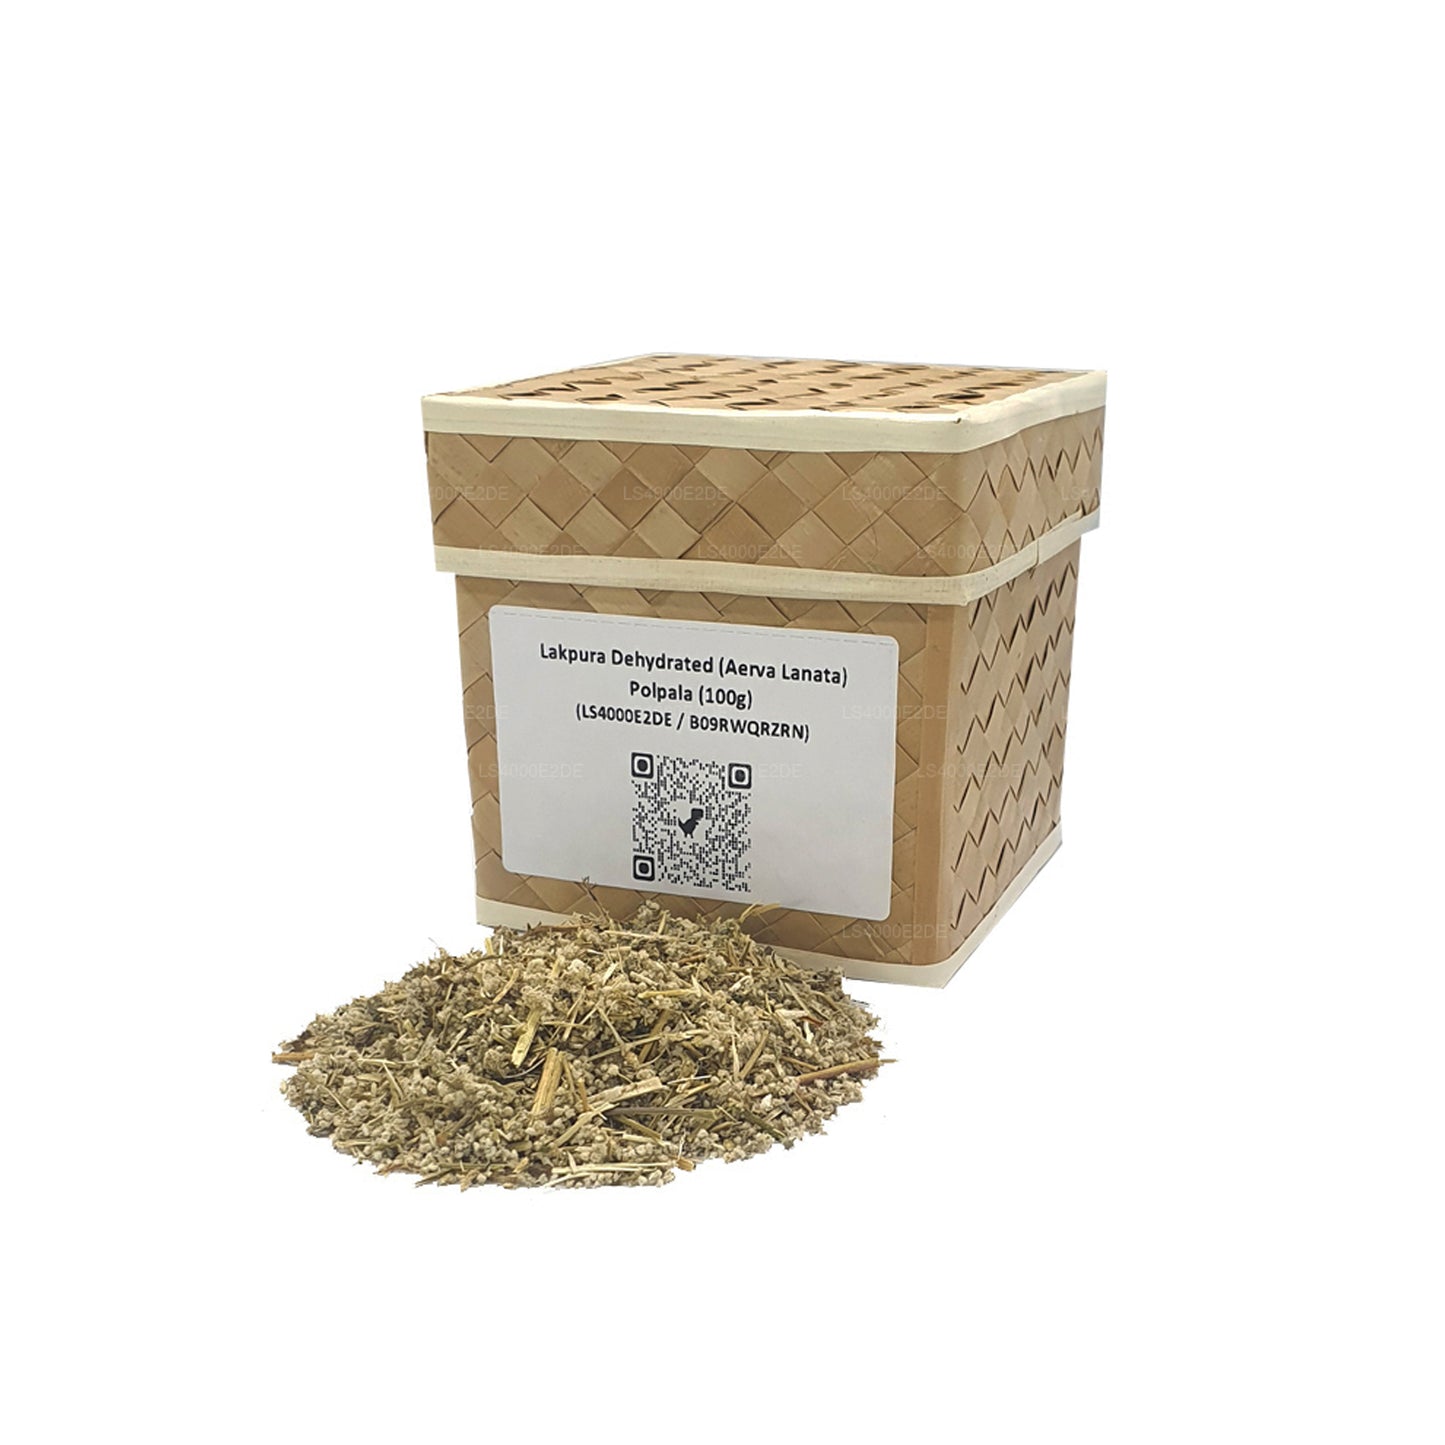 Lakpura Dehydriertes (Aerva Lanata) Polpala (100 g) Box